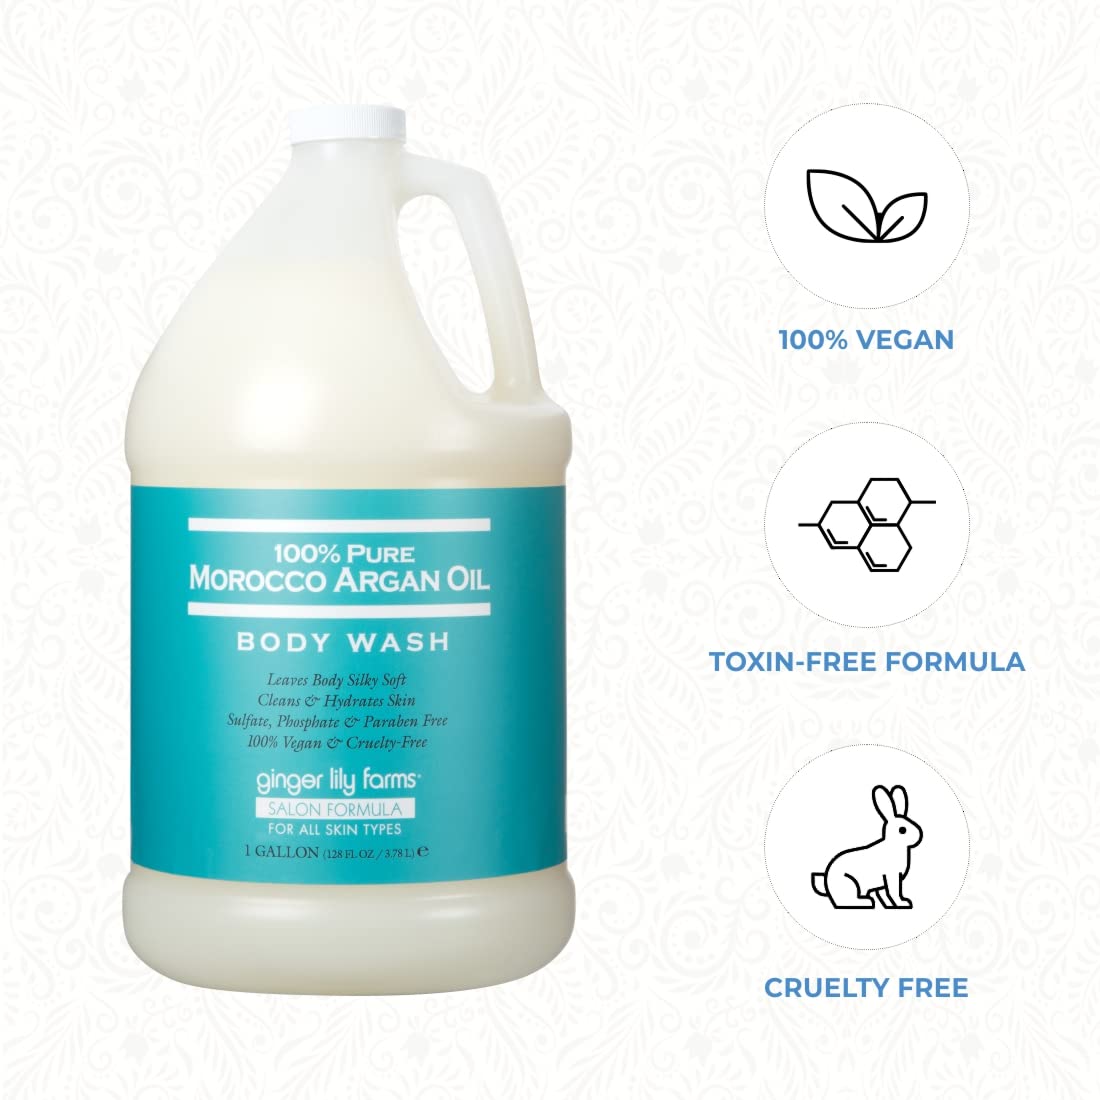 Ginger Lily Farms Salon Formula 100% Pure Morocco Argan Oil Body Wash for All Skin Types, 100% Vegan & Cruelty-Free, 1 Gallon (128 fl oz) Refill